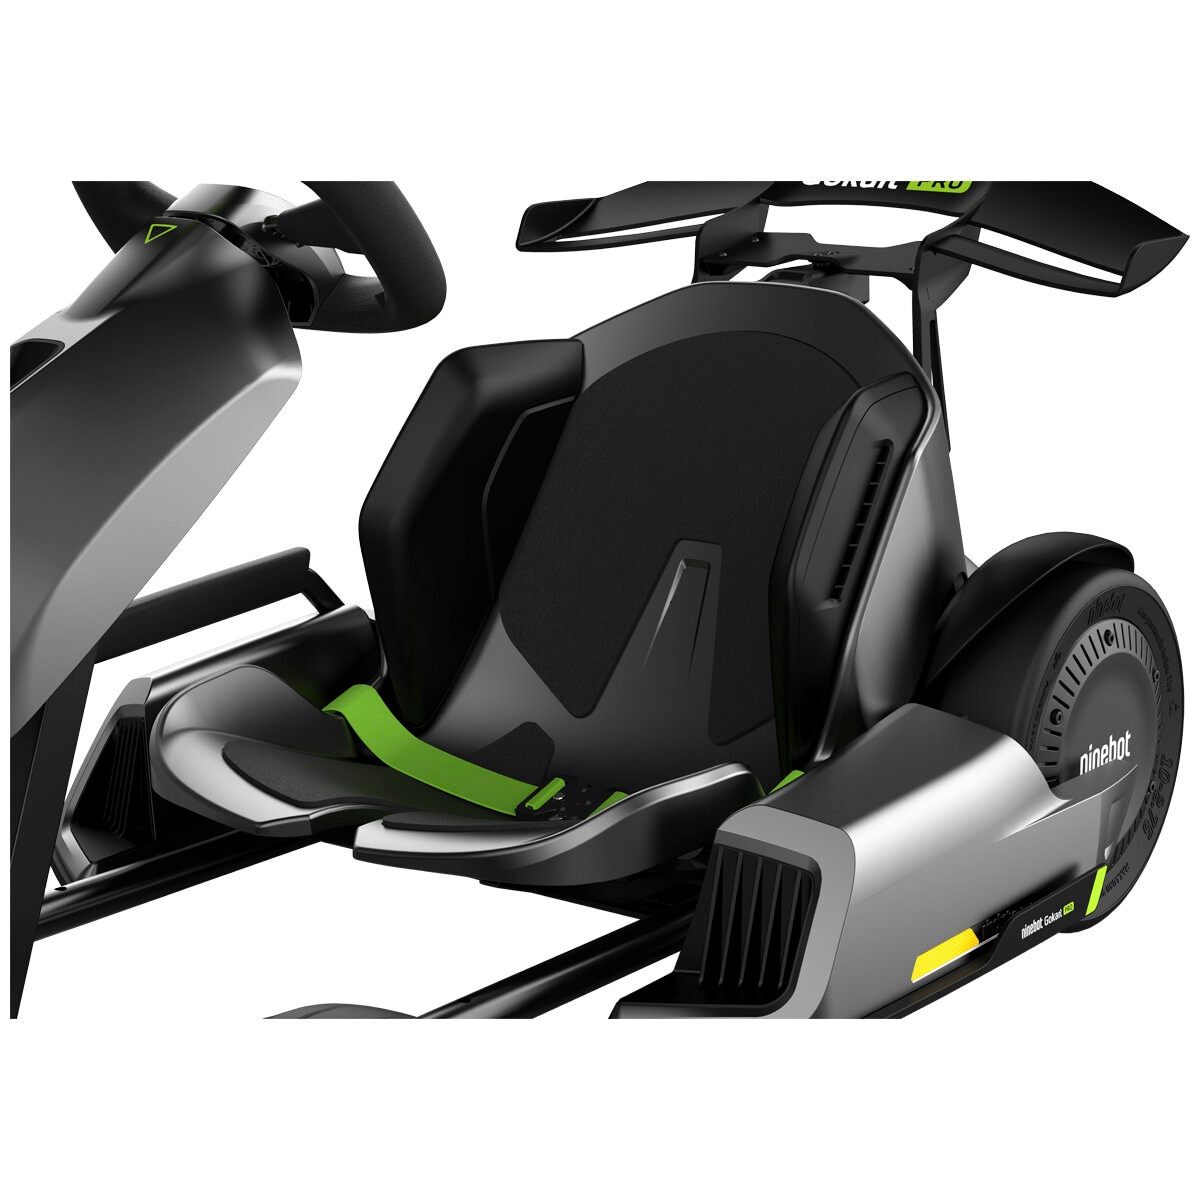 Segway Ninebot S-Max & Pro Go Kart Kit